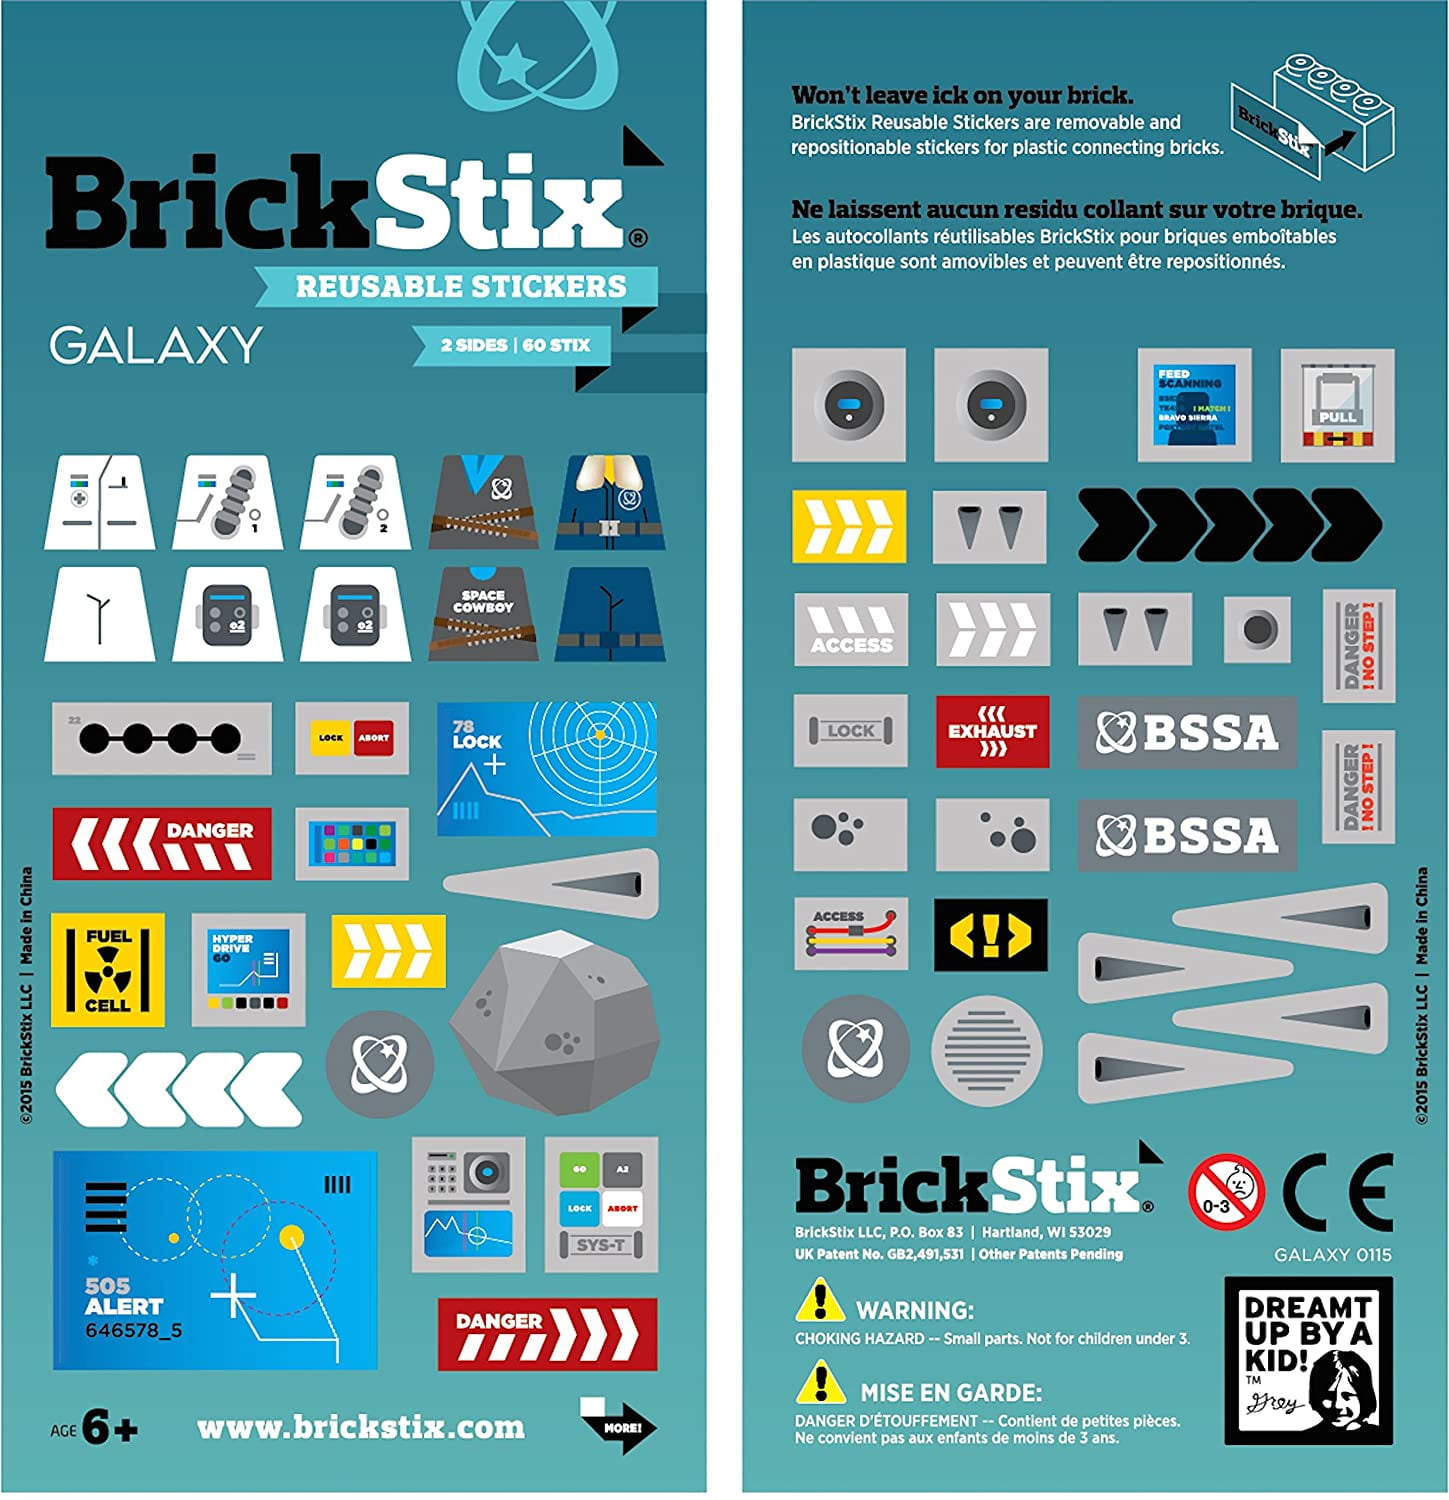 Brickstix Galaxy Brick Compatible Reusable Stickers Space Station 4 Packs 